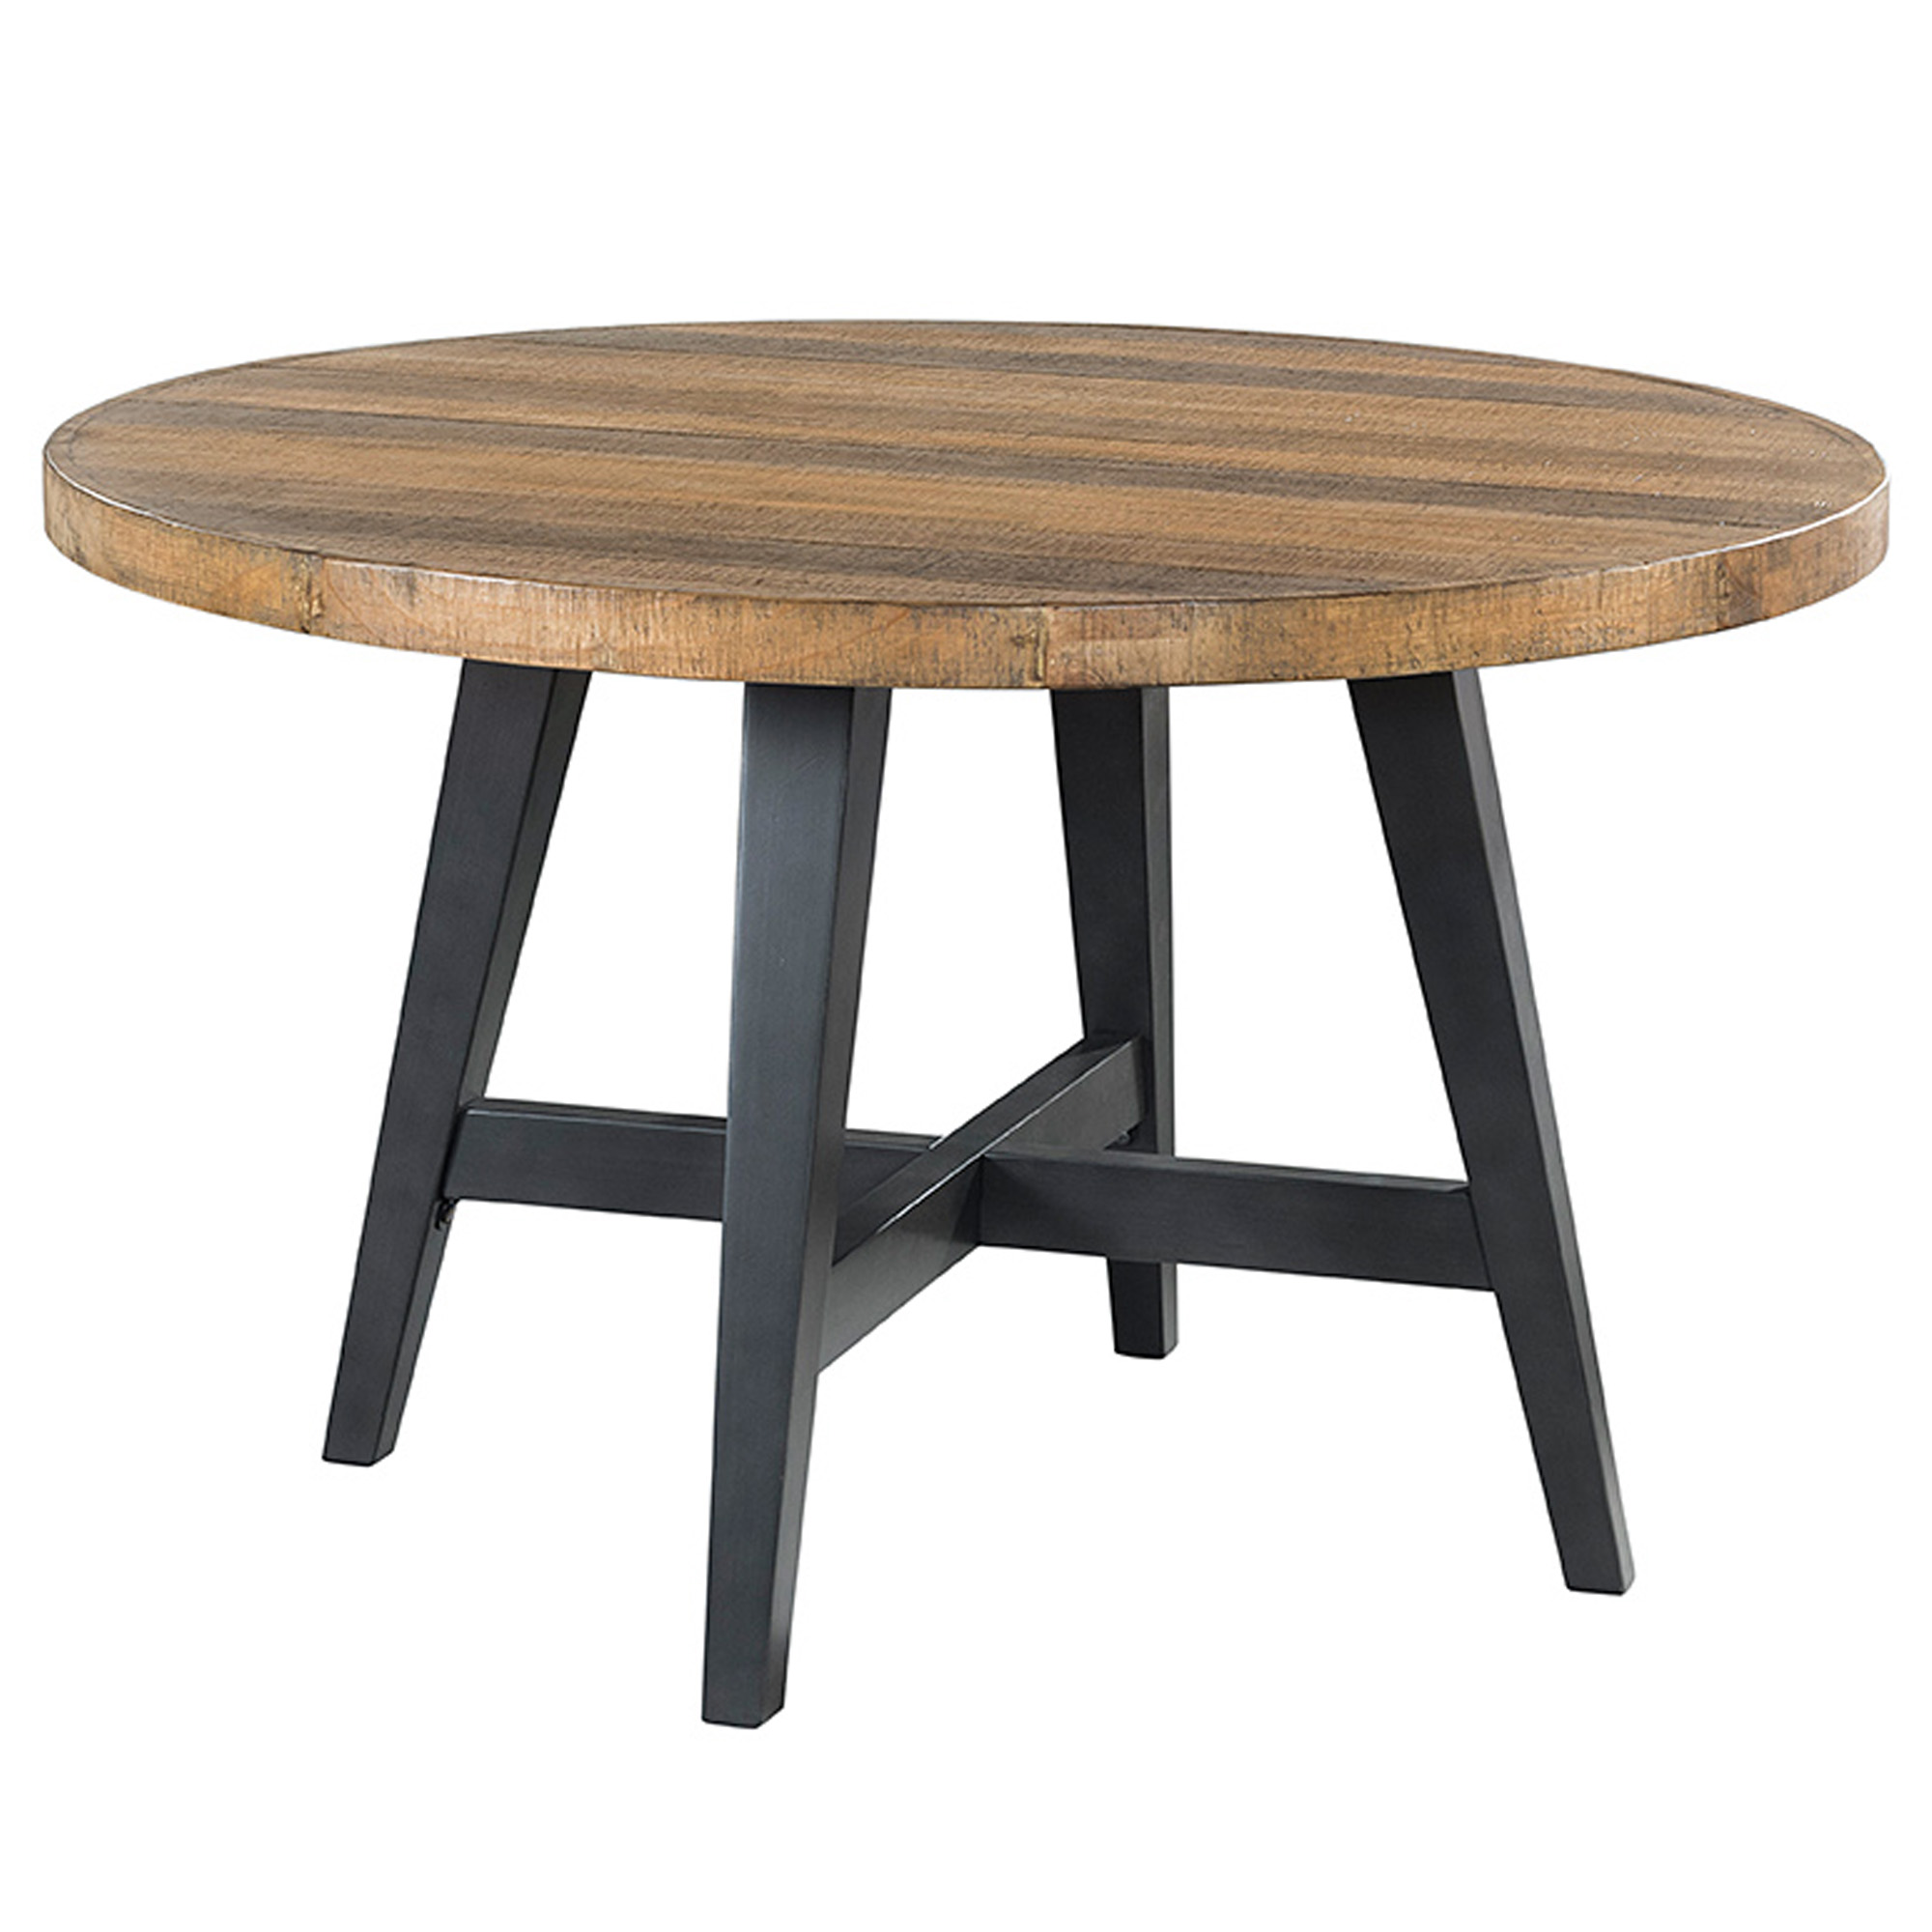 Urban Rustic Round Dining Table - intercon-furniture